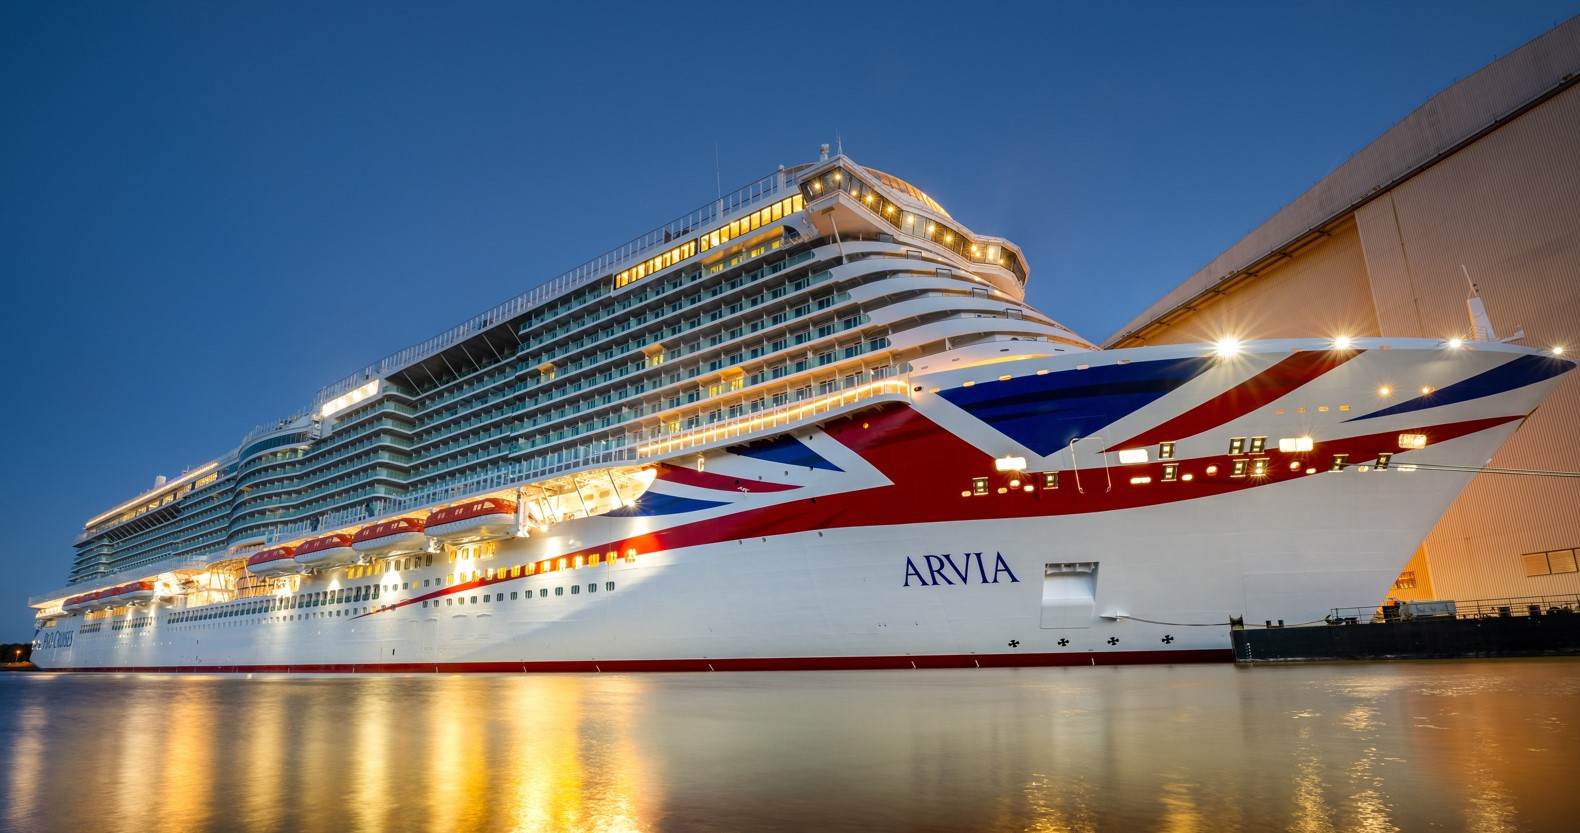 P&O Cruises Arvia leaves the shipyard Cruising Journal